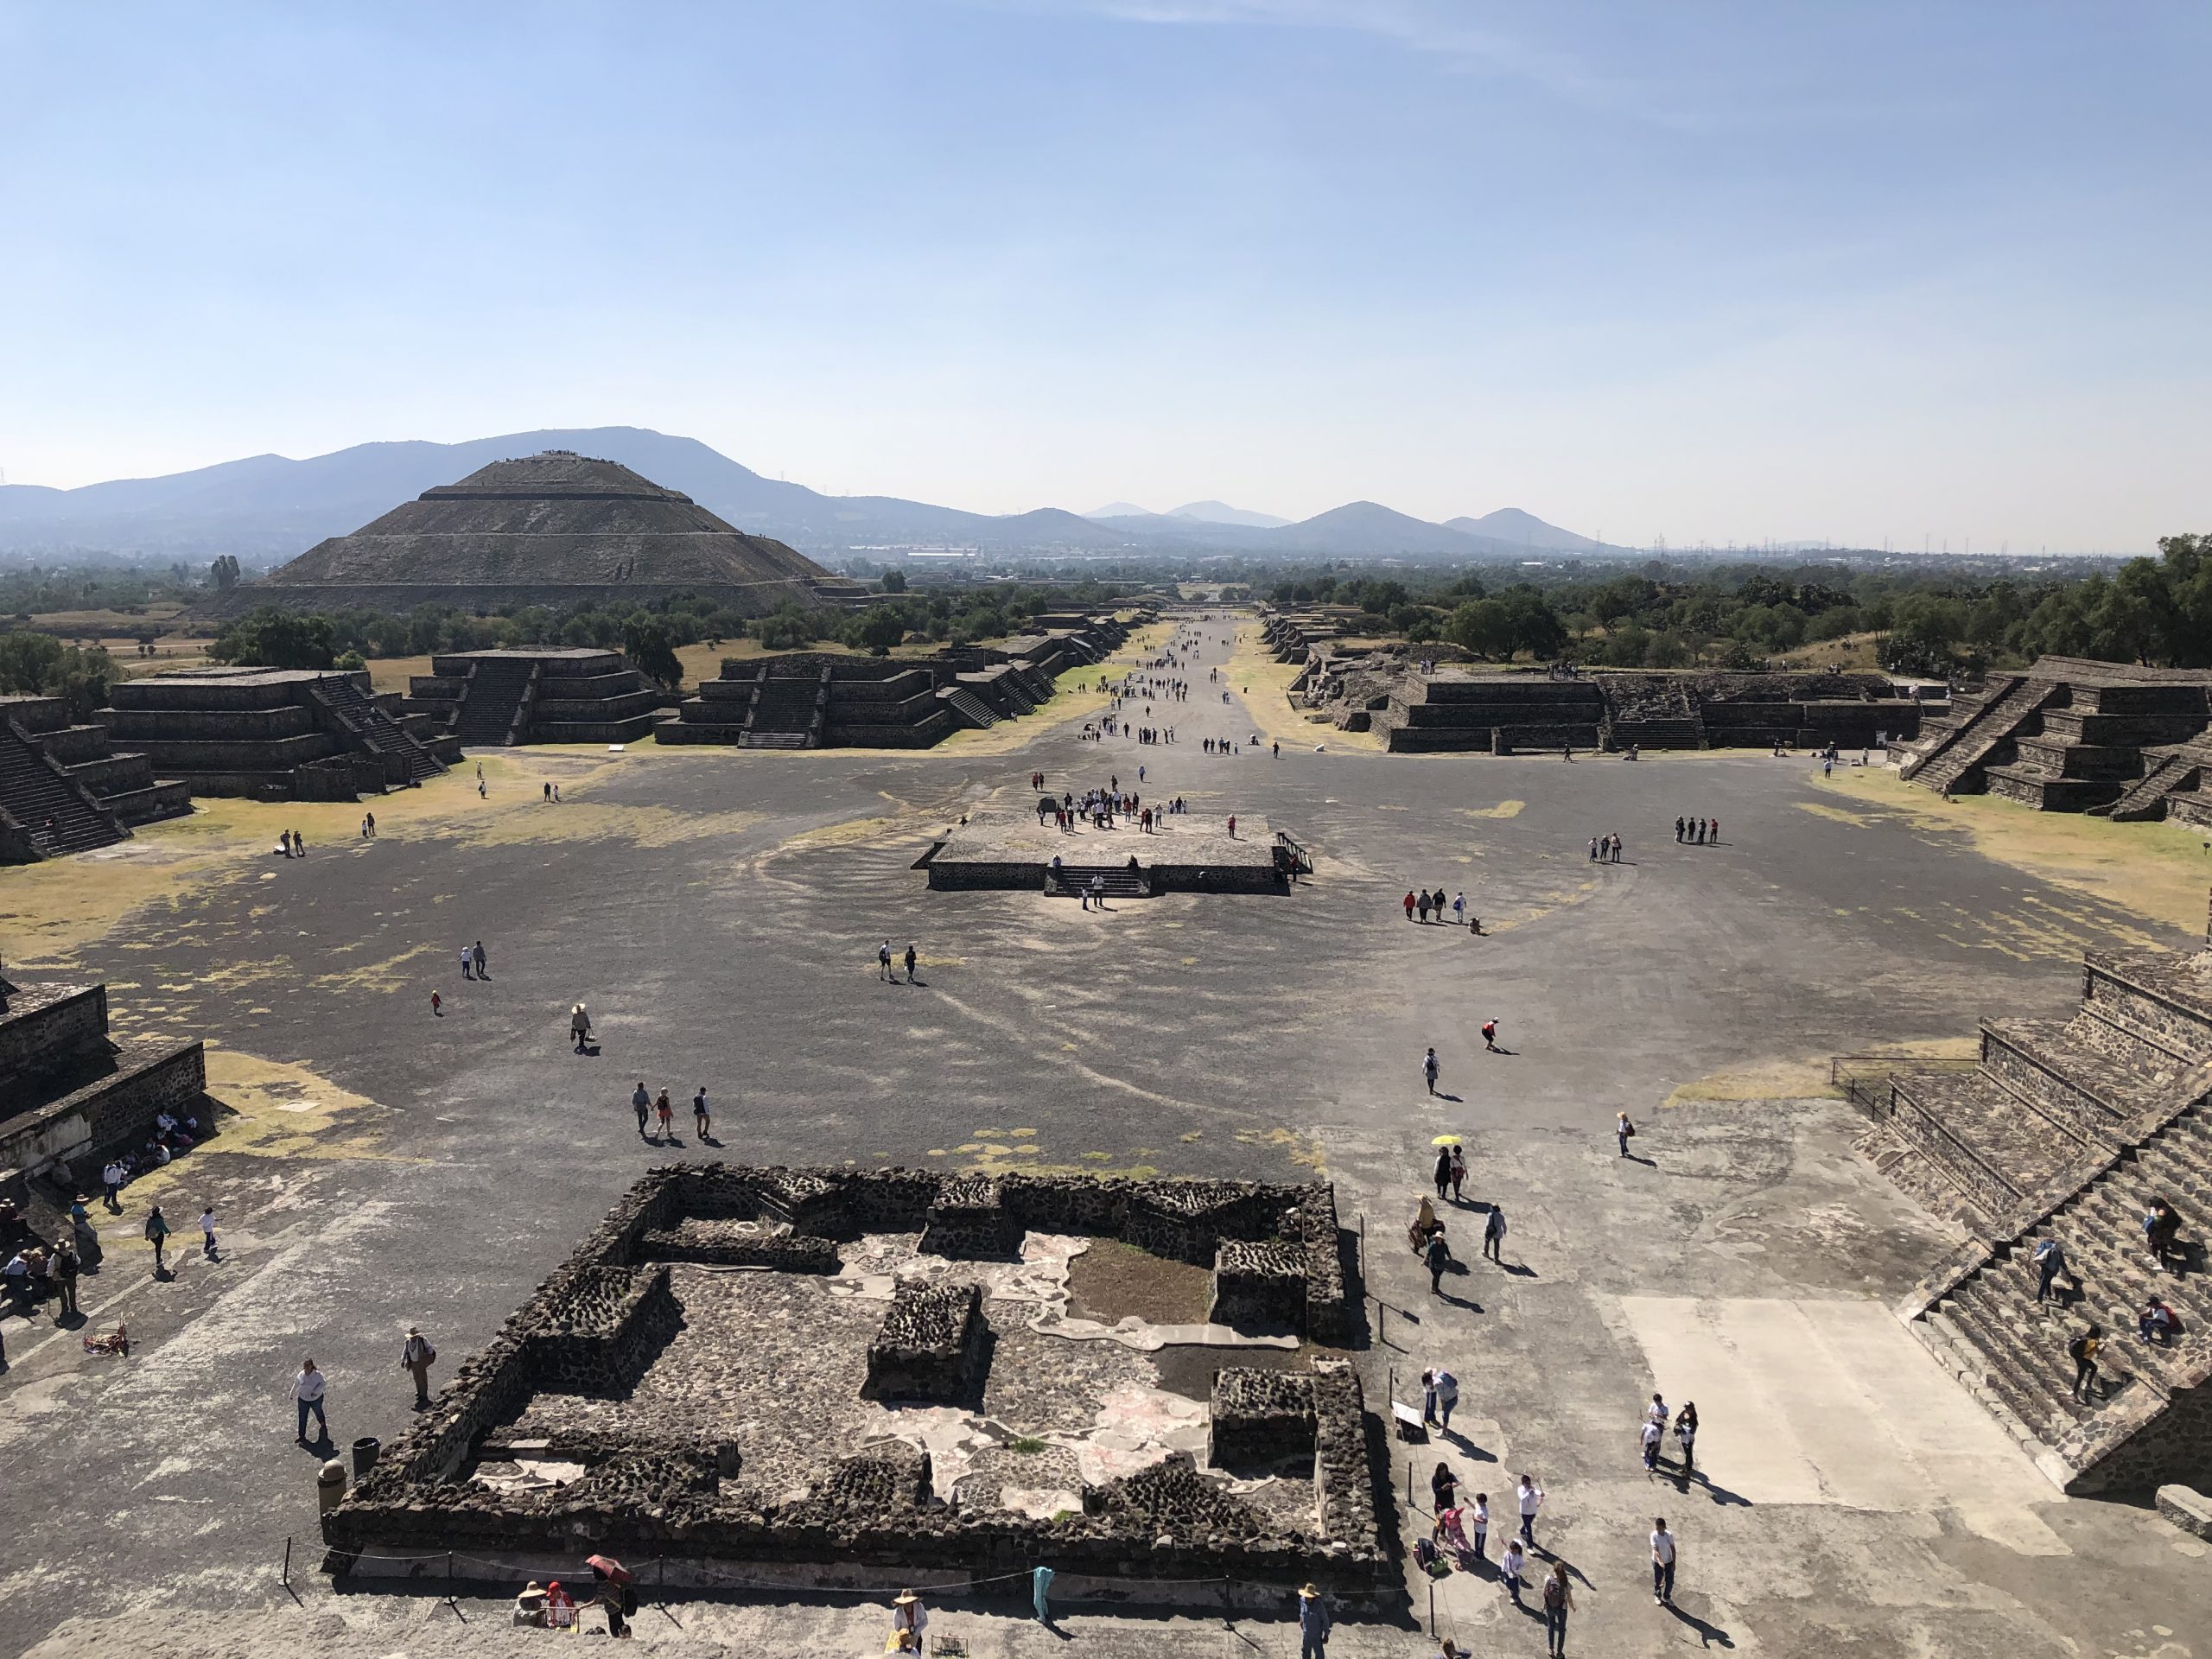 Climbing the pyramids of Teotihuacan - Hello Carbar